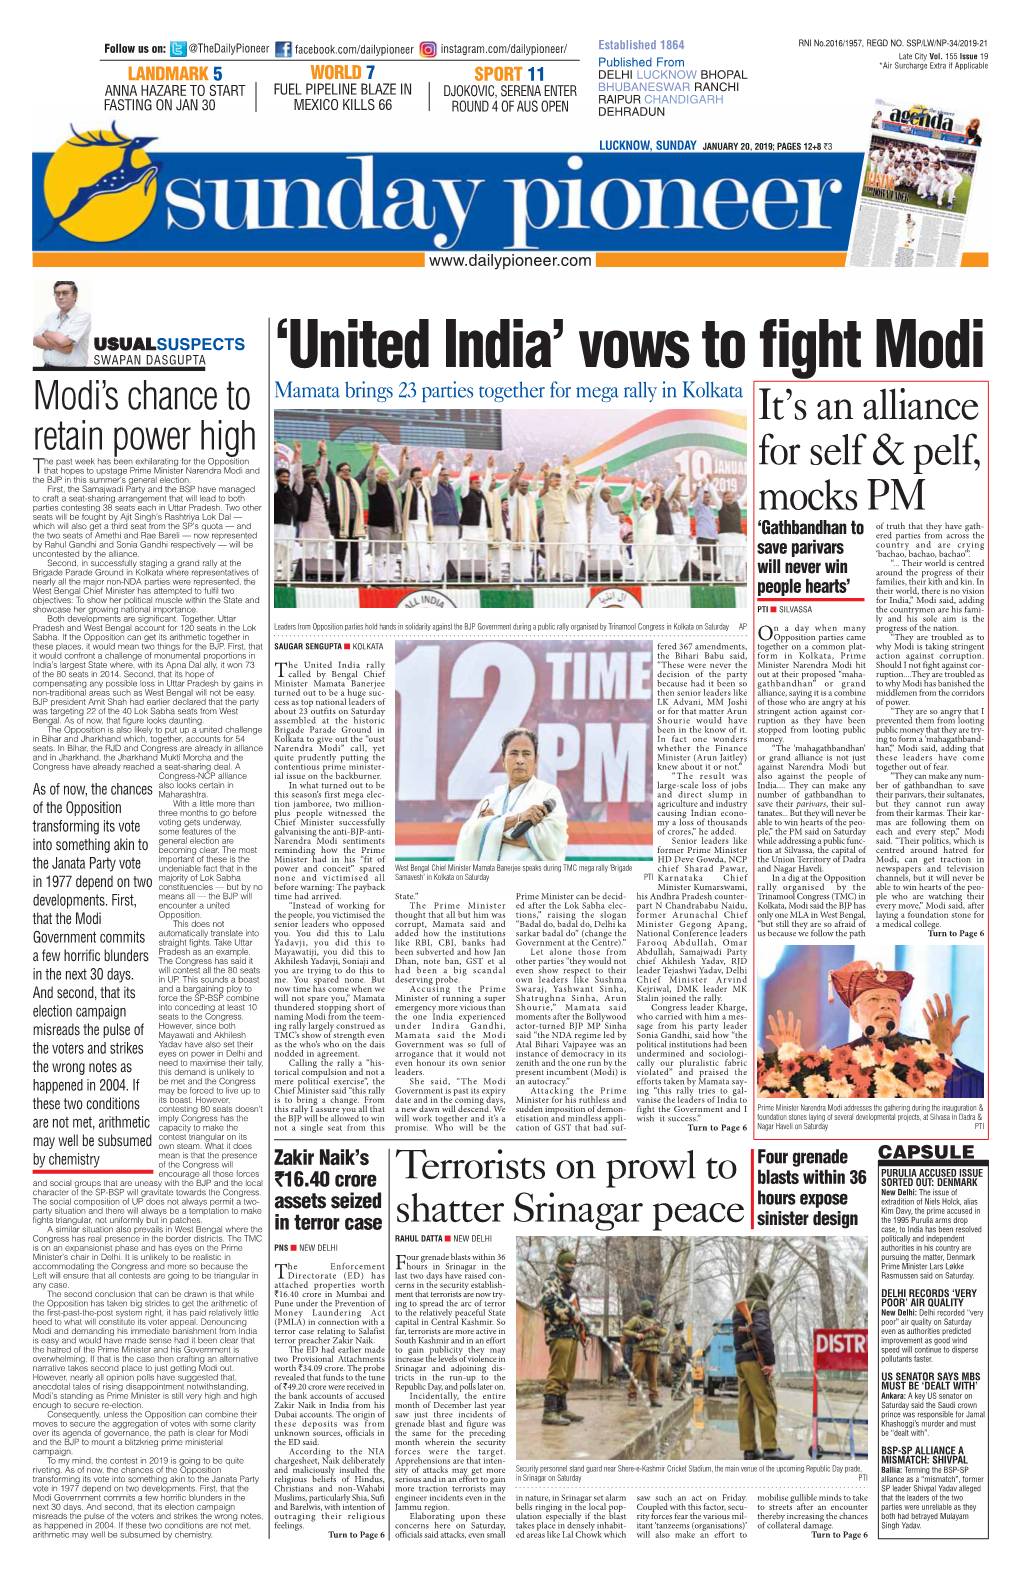 'United India' Vows to Fight Modi